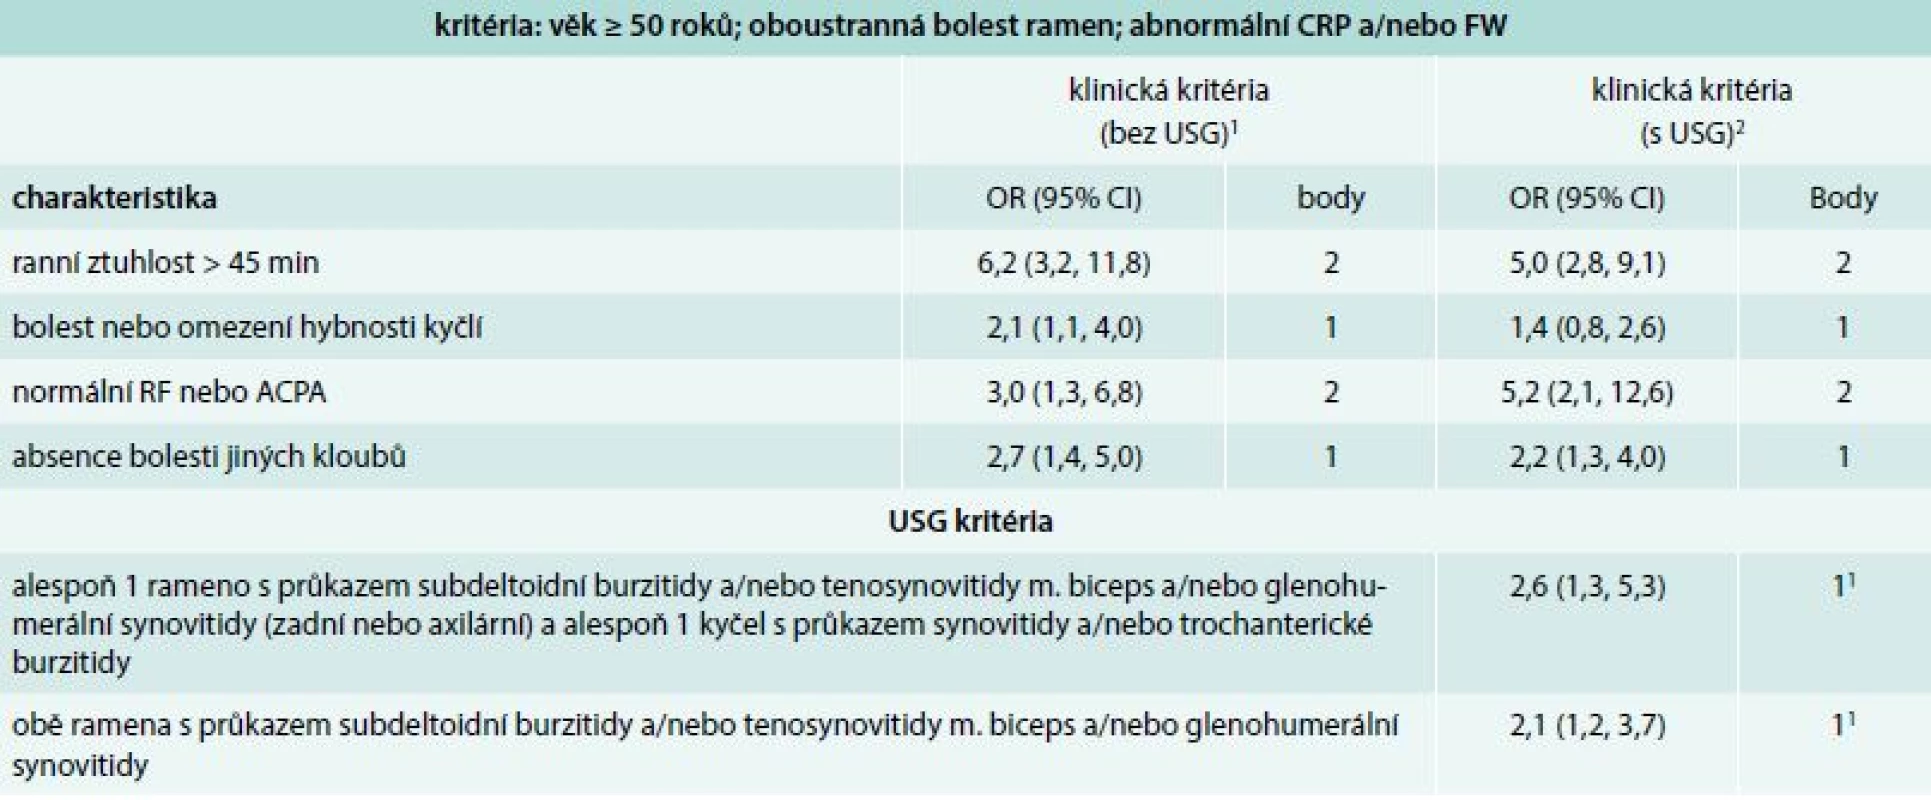 Klasifikační kritéria EULAR/ACR pro polymyalgia rheumatica z roku 2012. Skórovací algoritmus pro polymyalgia rheumatica s a bez použití USG vyšetření